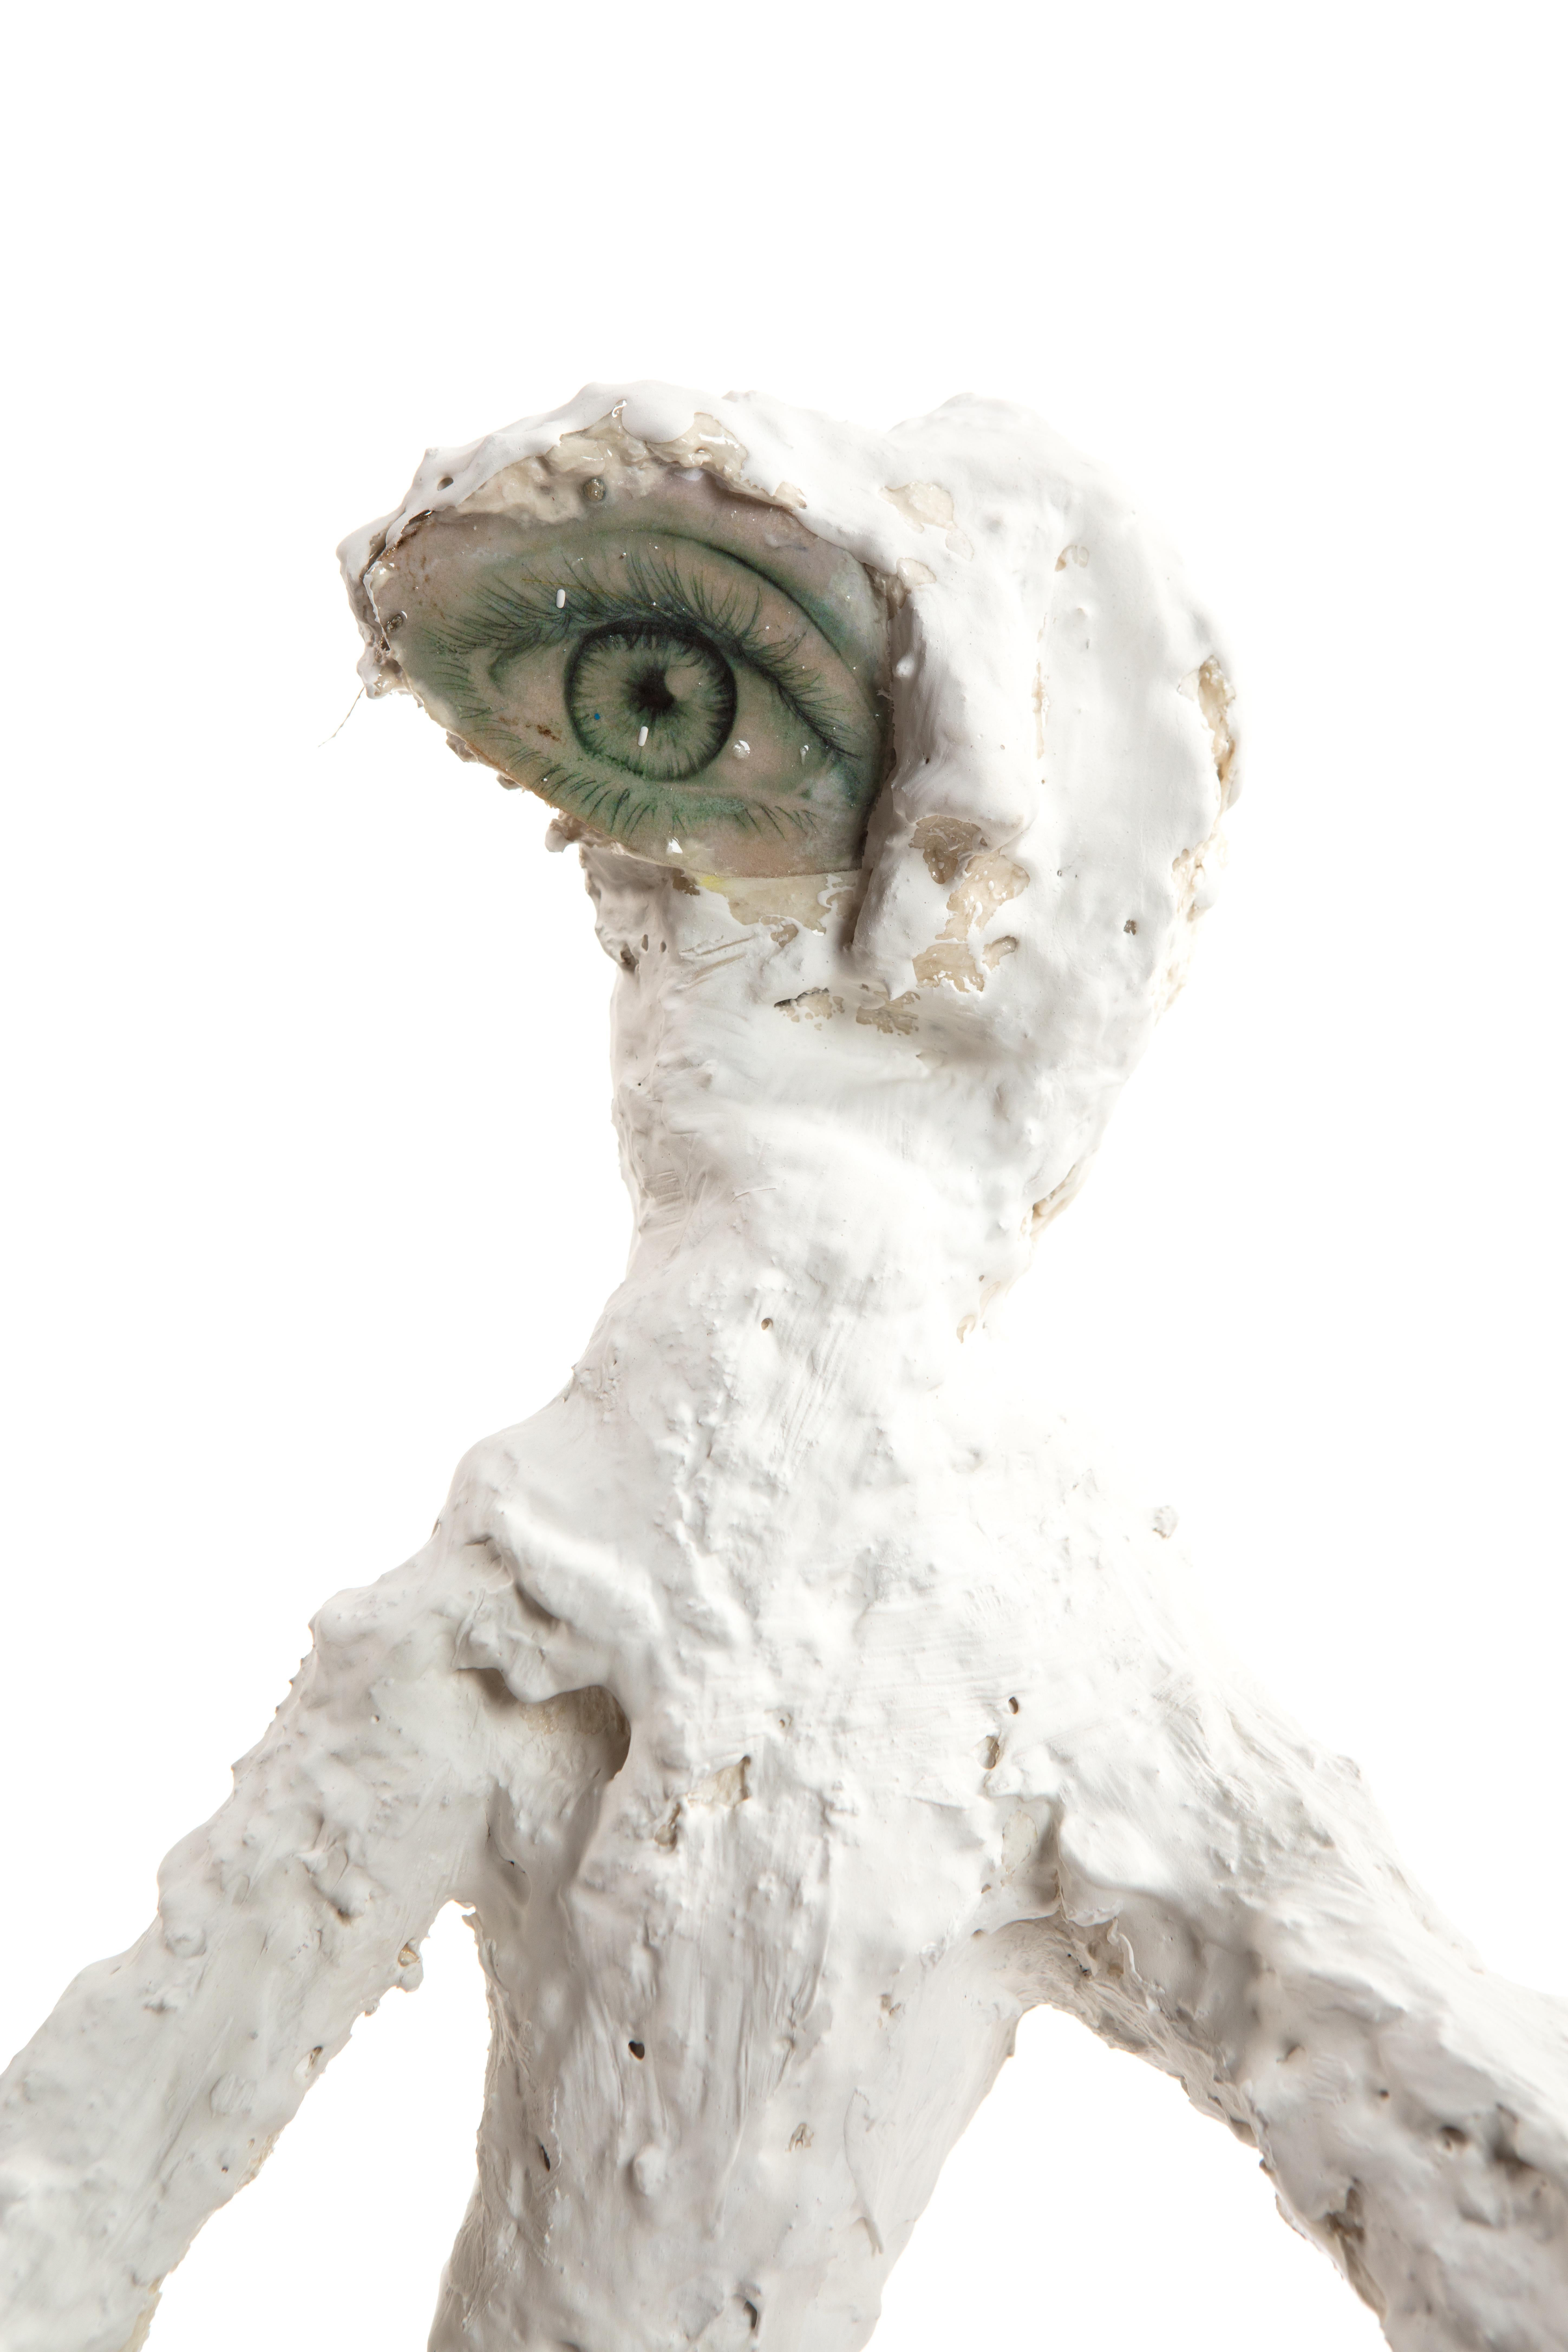 Hand-Crafted White Plaster Sculpture Man Figure, 21st Century by Mattia Biagi